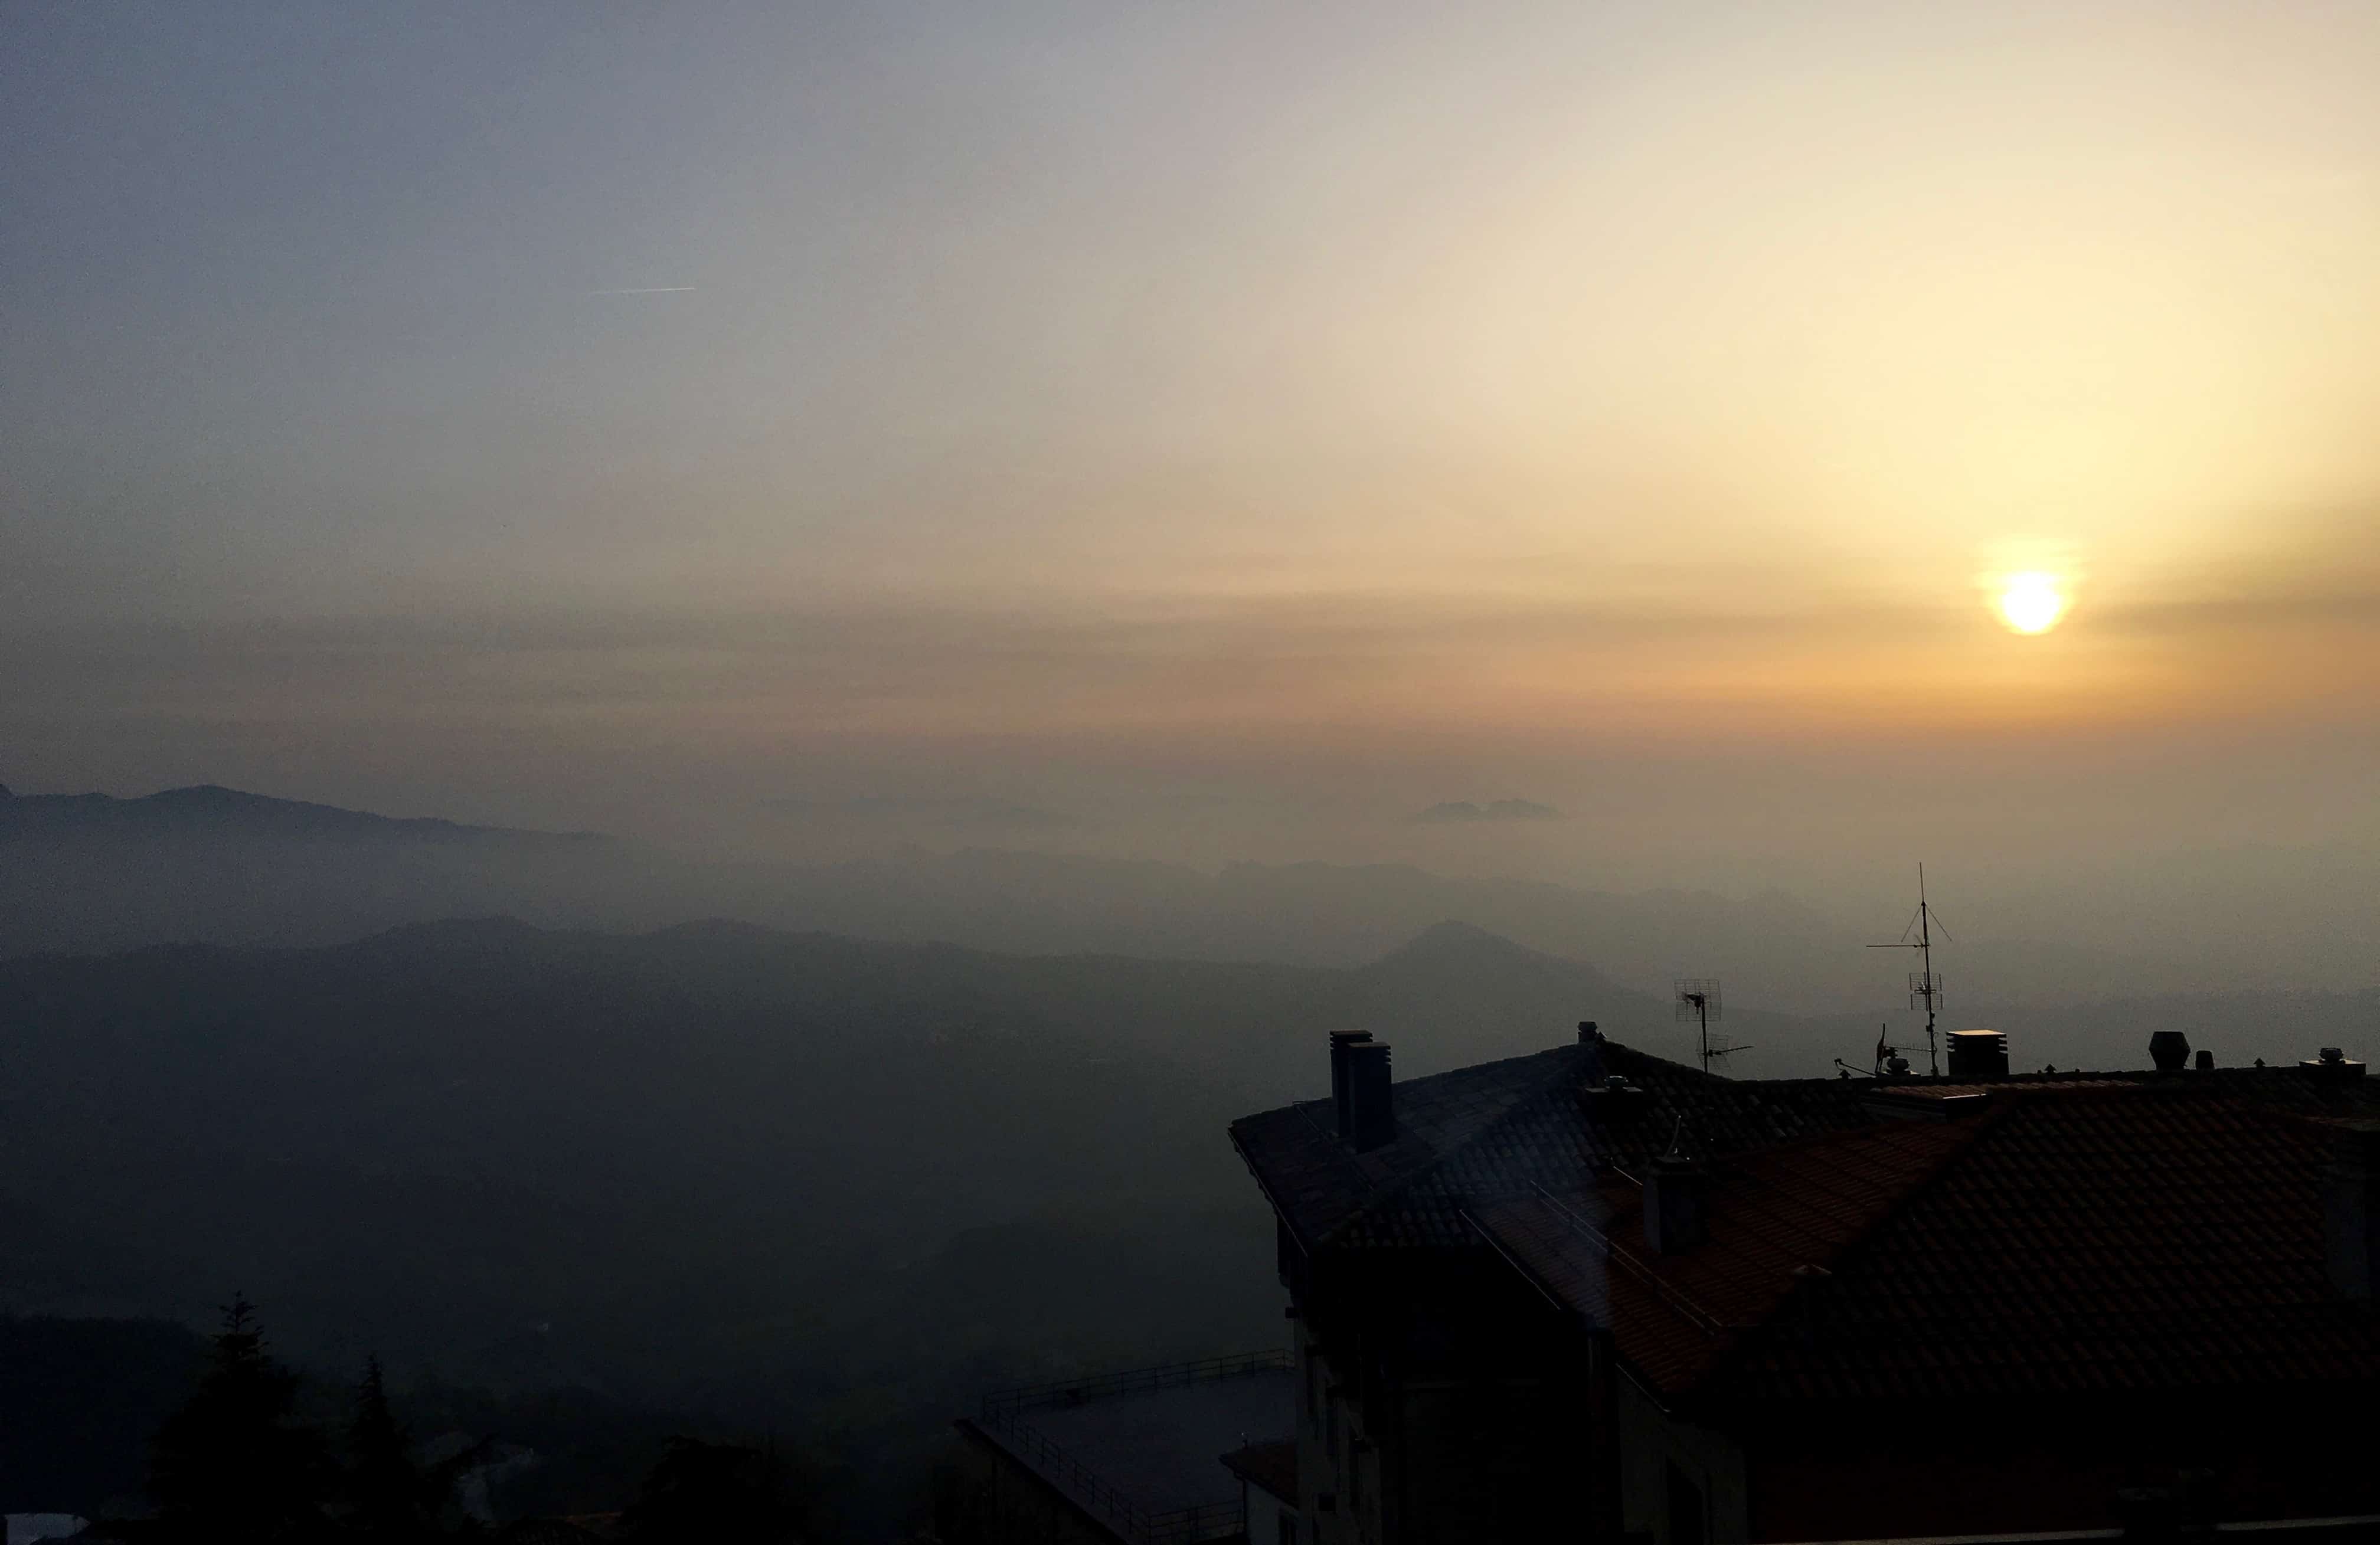 Sunset through the mist from the Citta di San Marino.